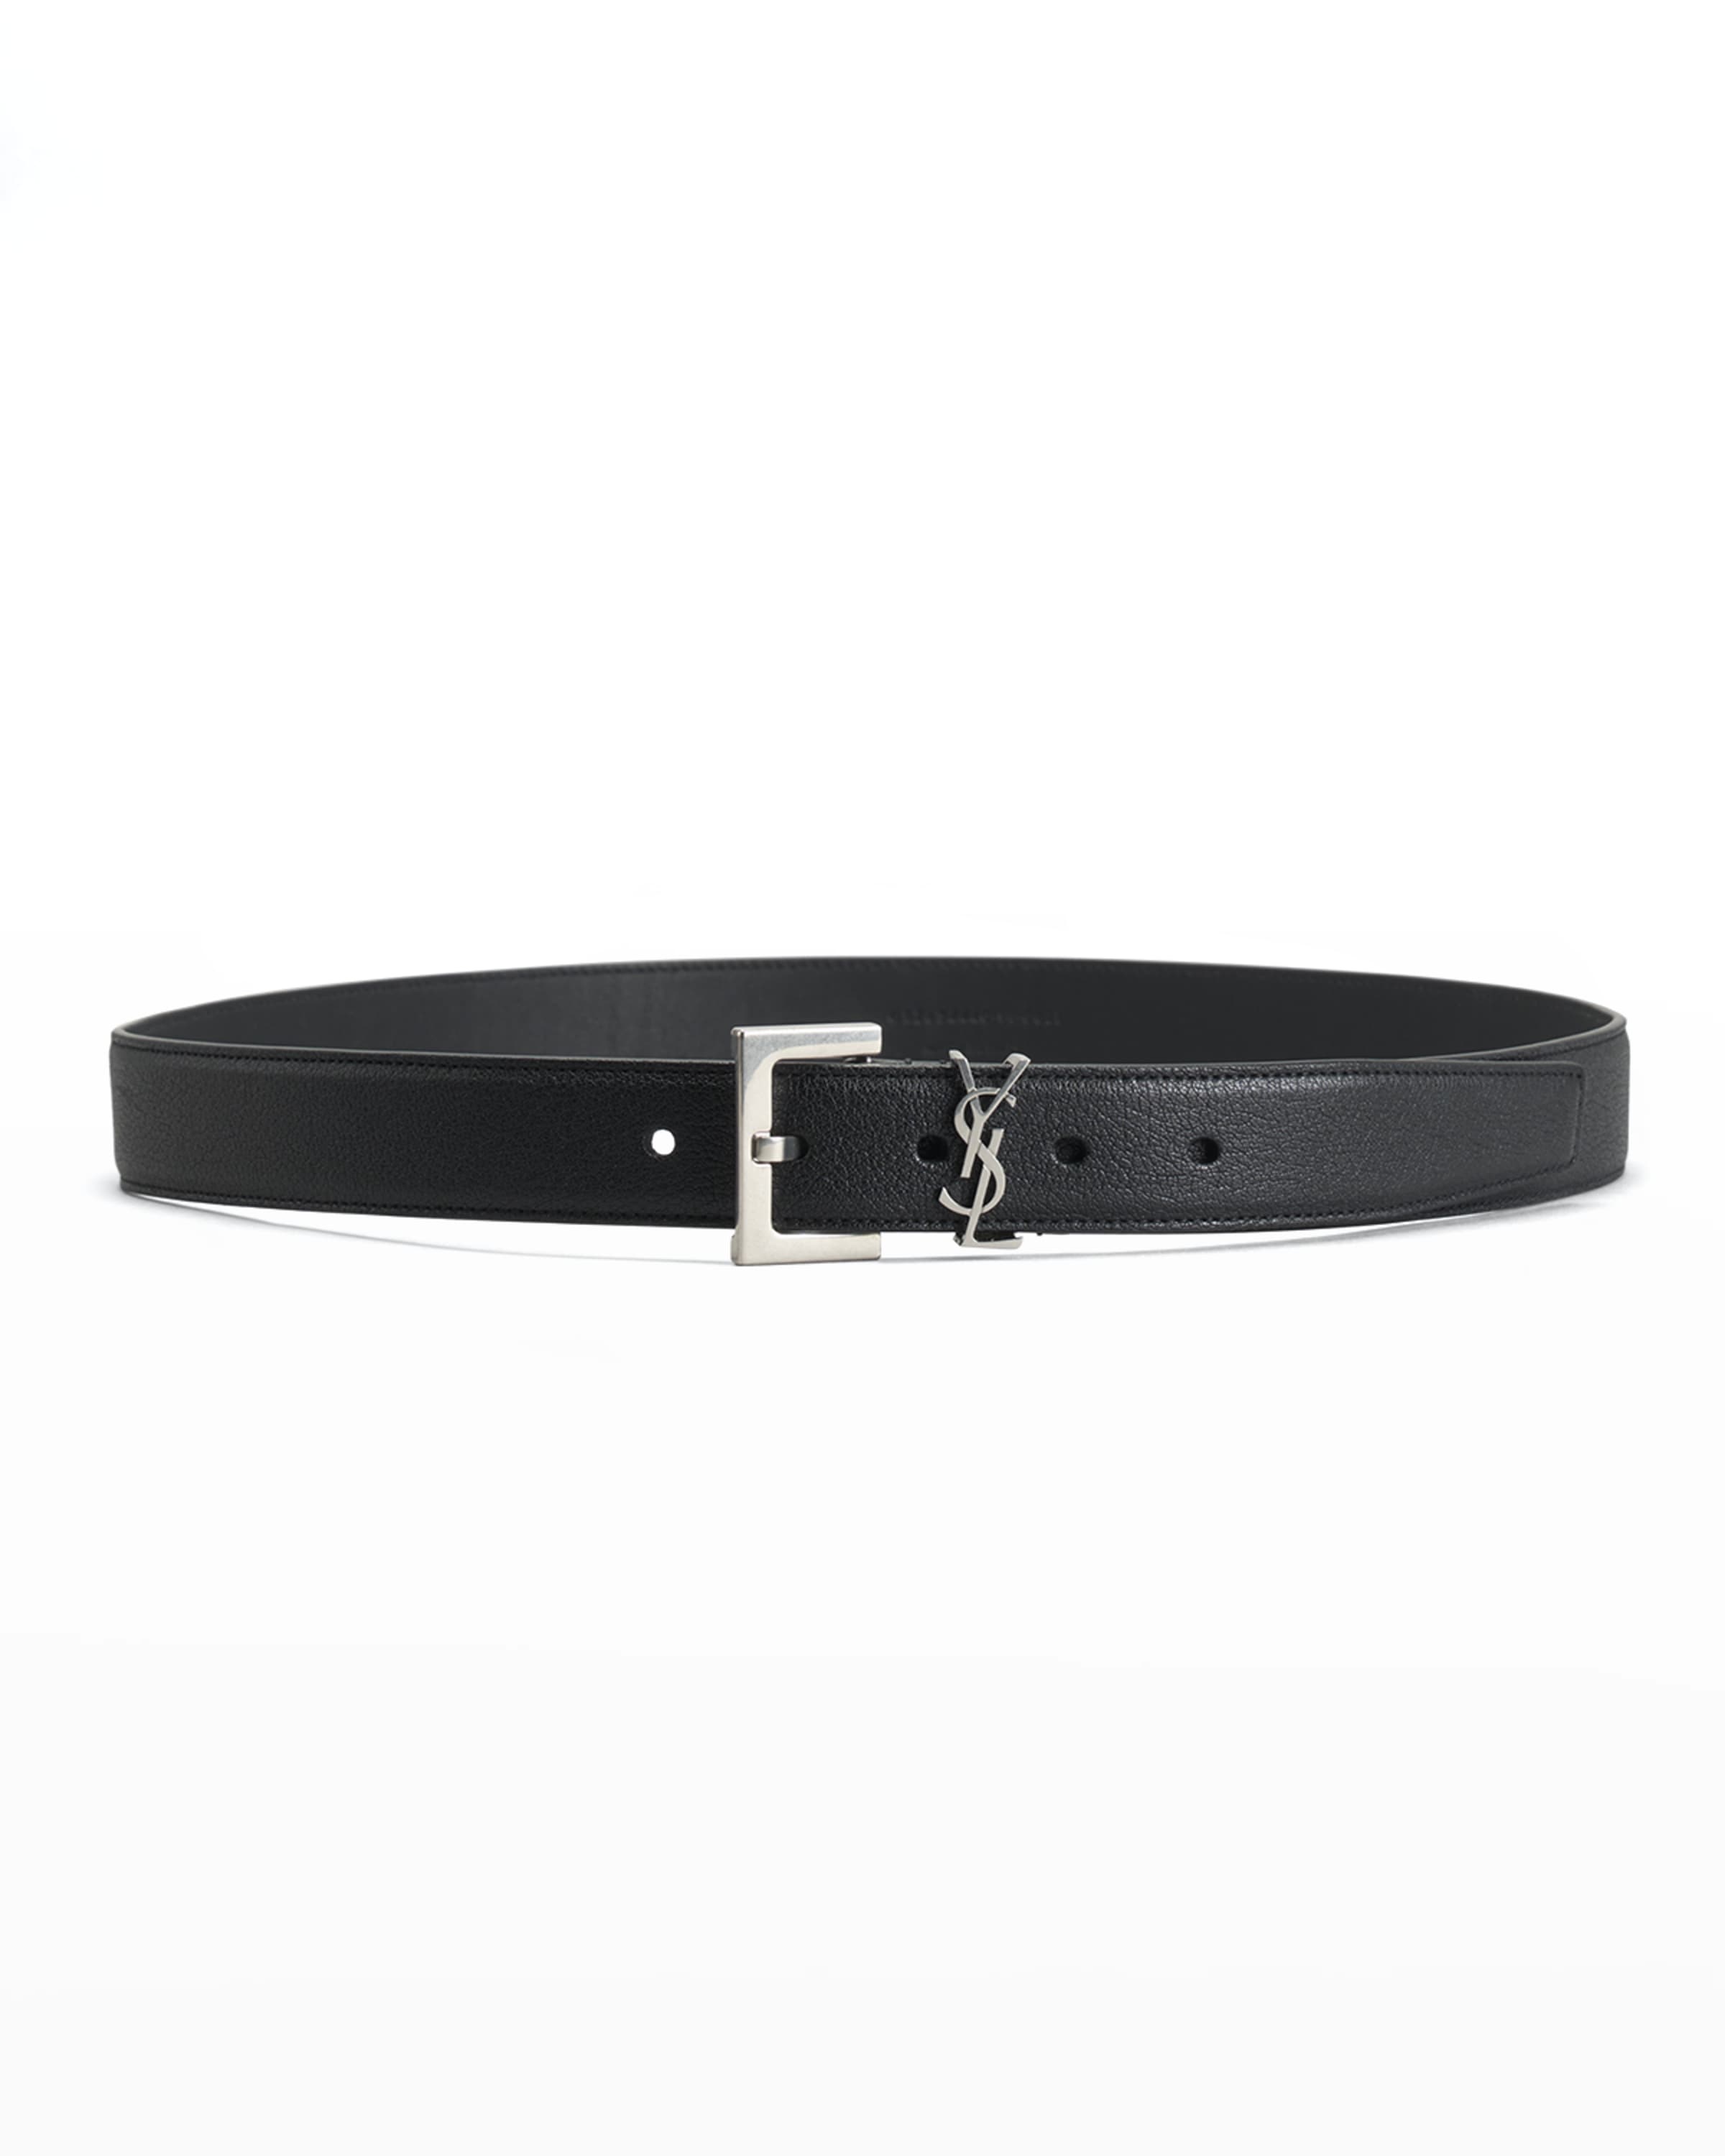 YSL Cintura Box Leather Belt - 1